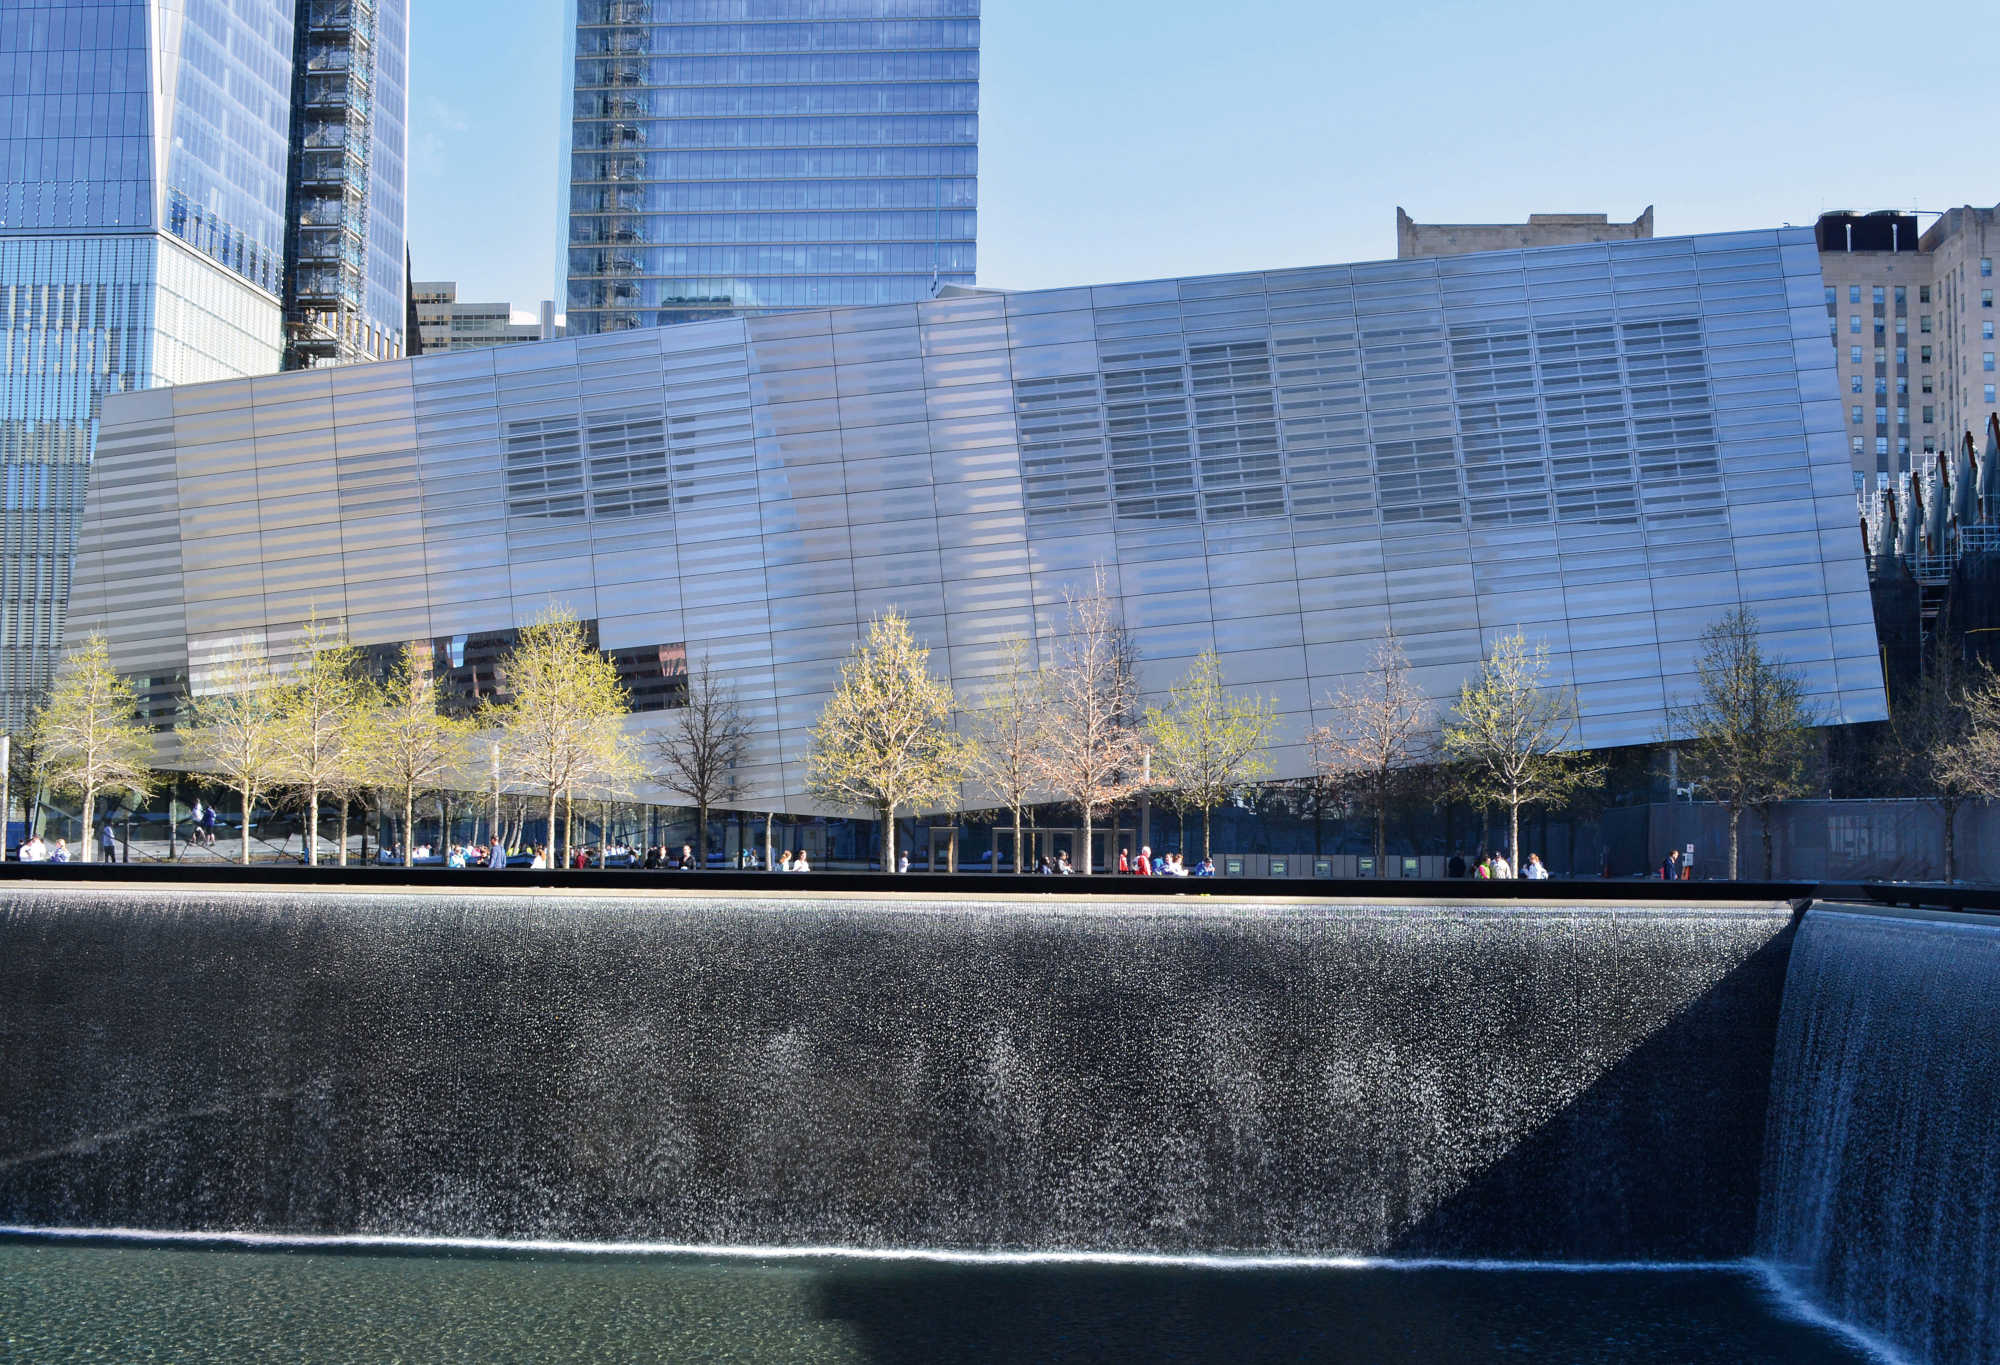 The memorials of 9/11